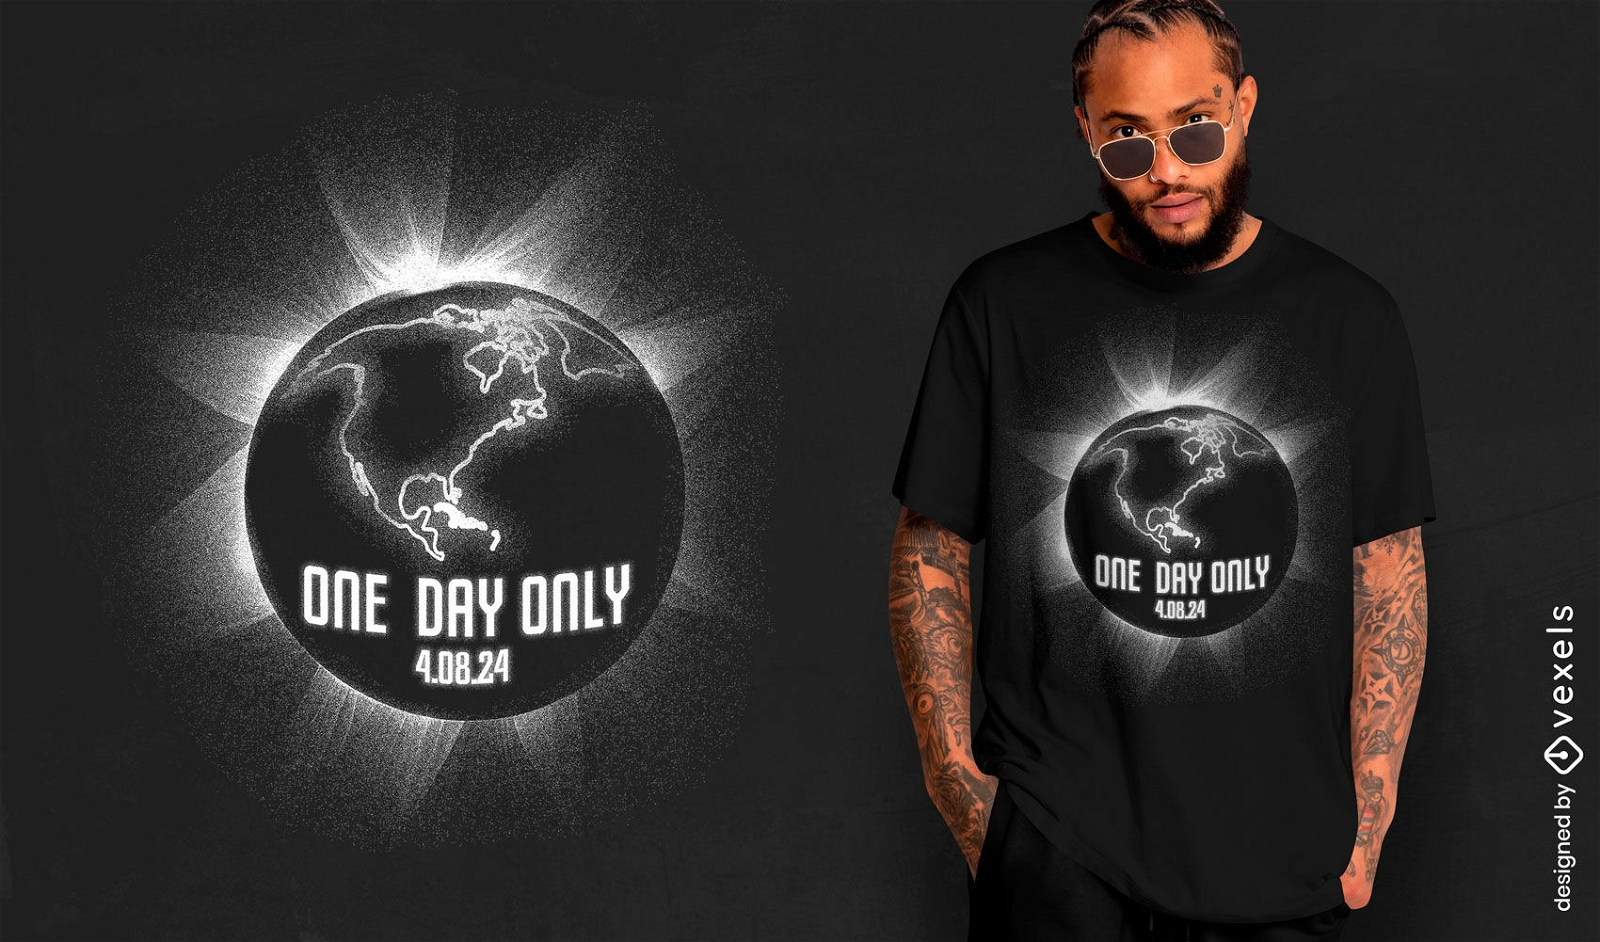 Total eclipse event t-shirt design